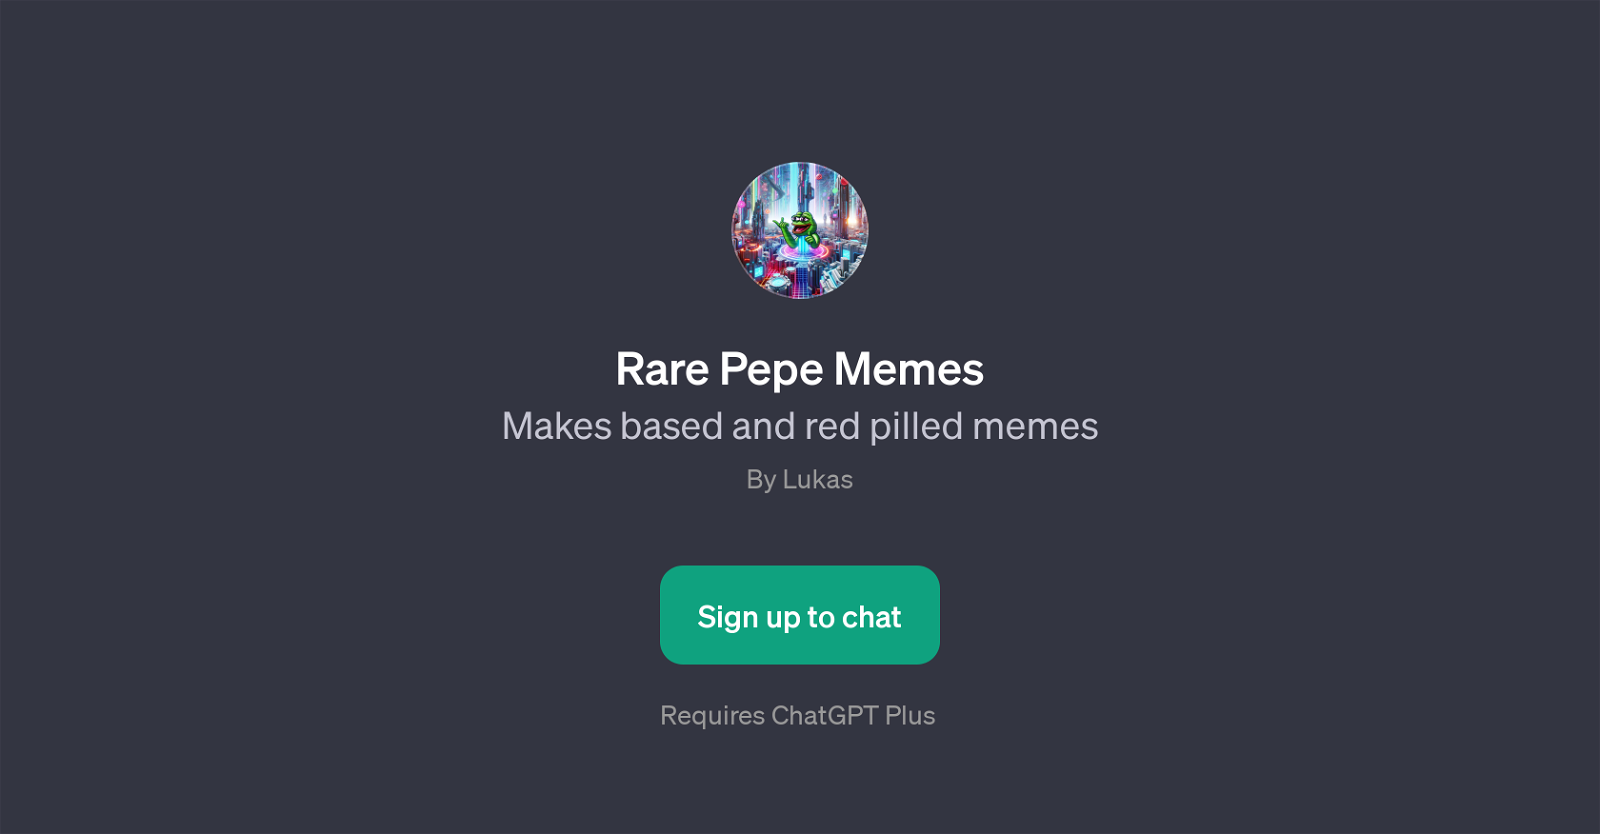 Rare Pepe Memes website